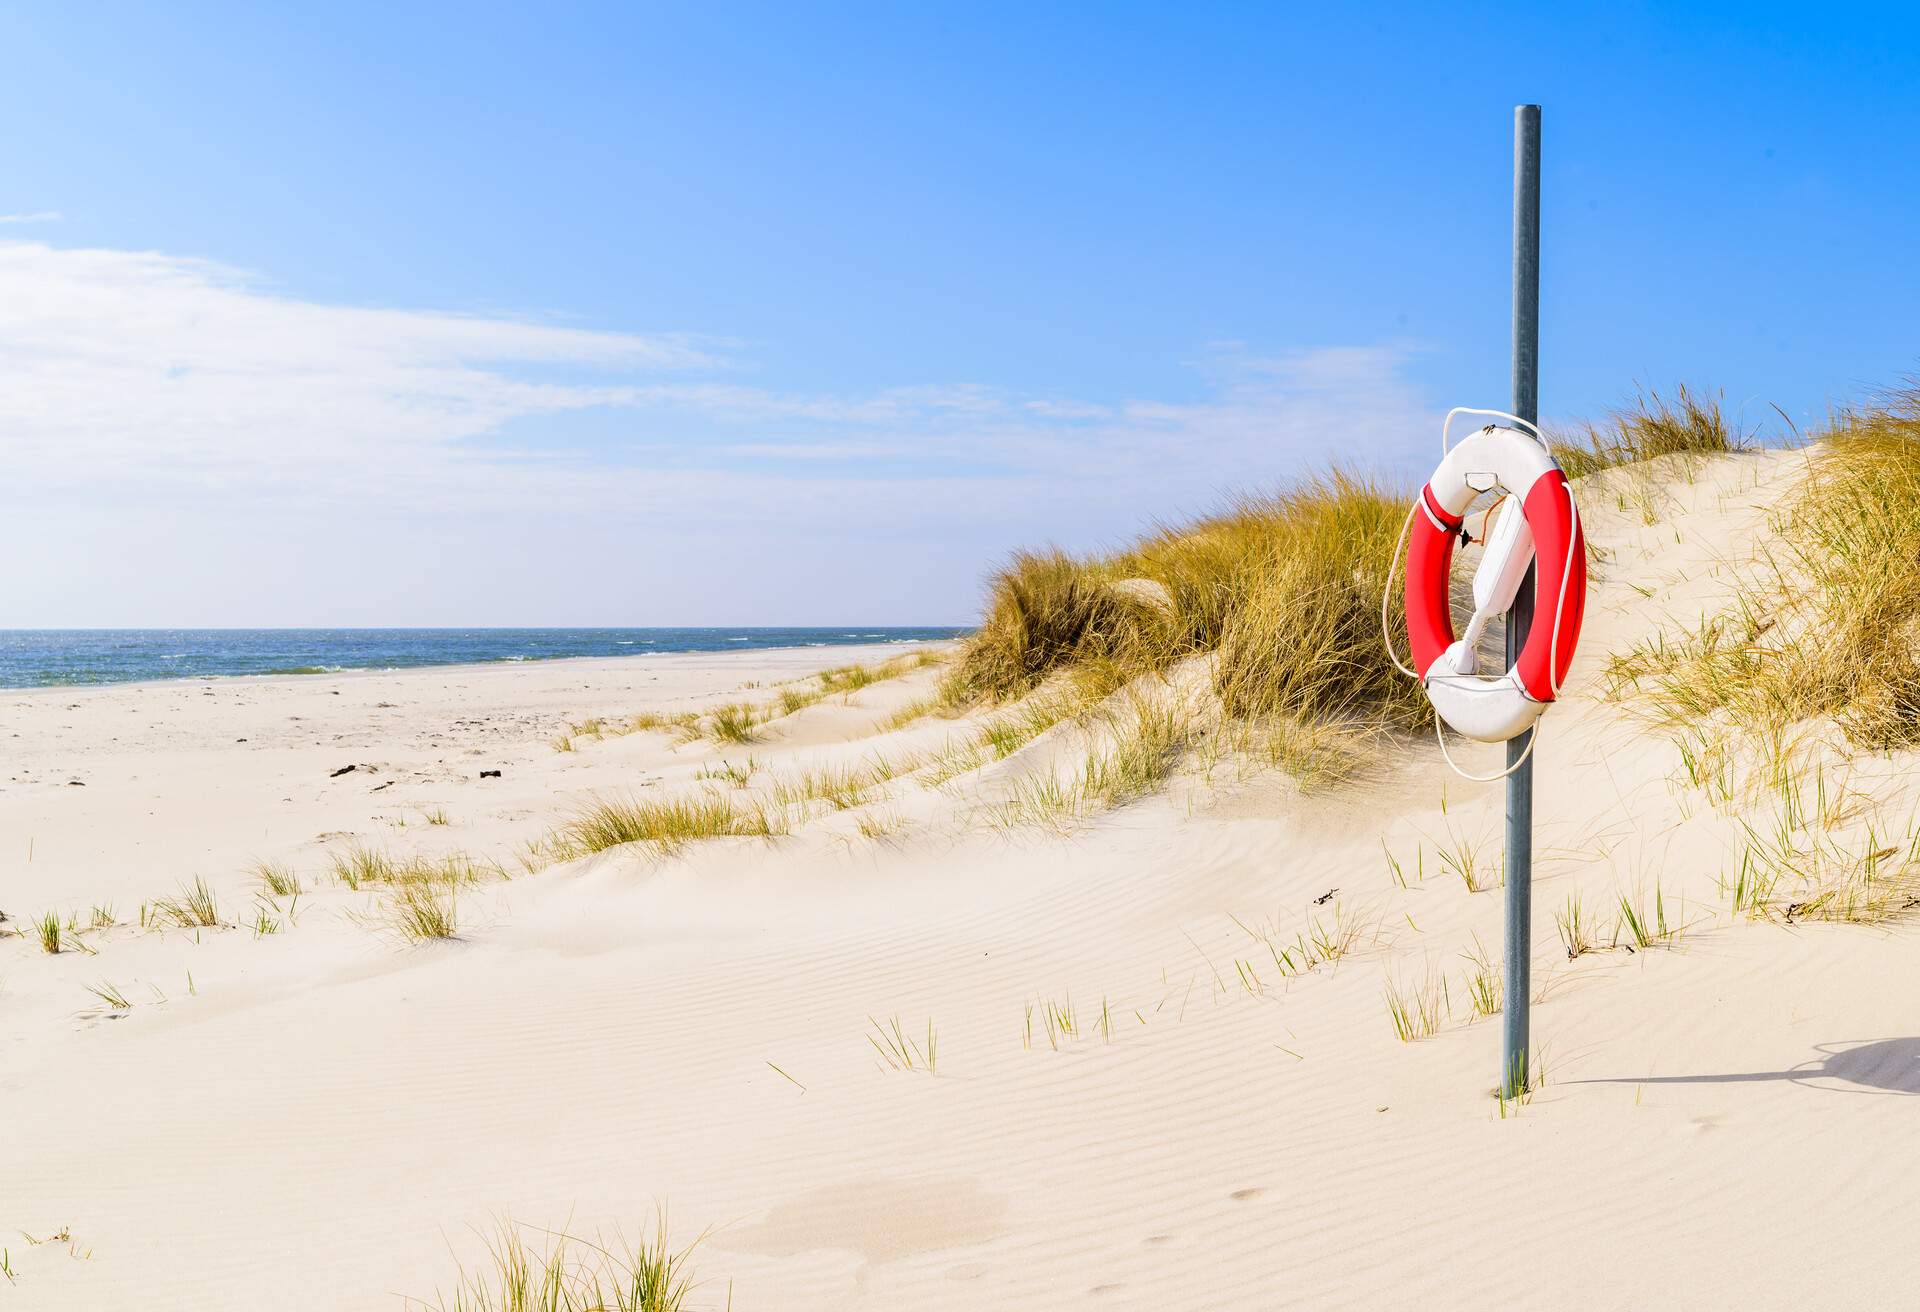 Malarhusen, Sweden - Lifebuoy on an empty sandy beach on a sunny day.